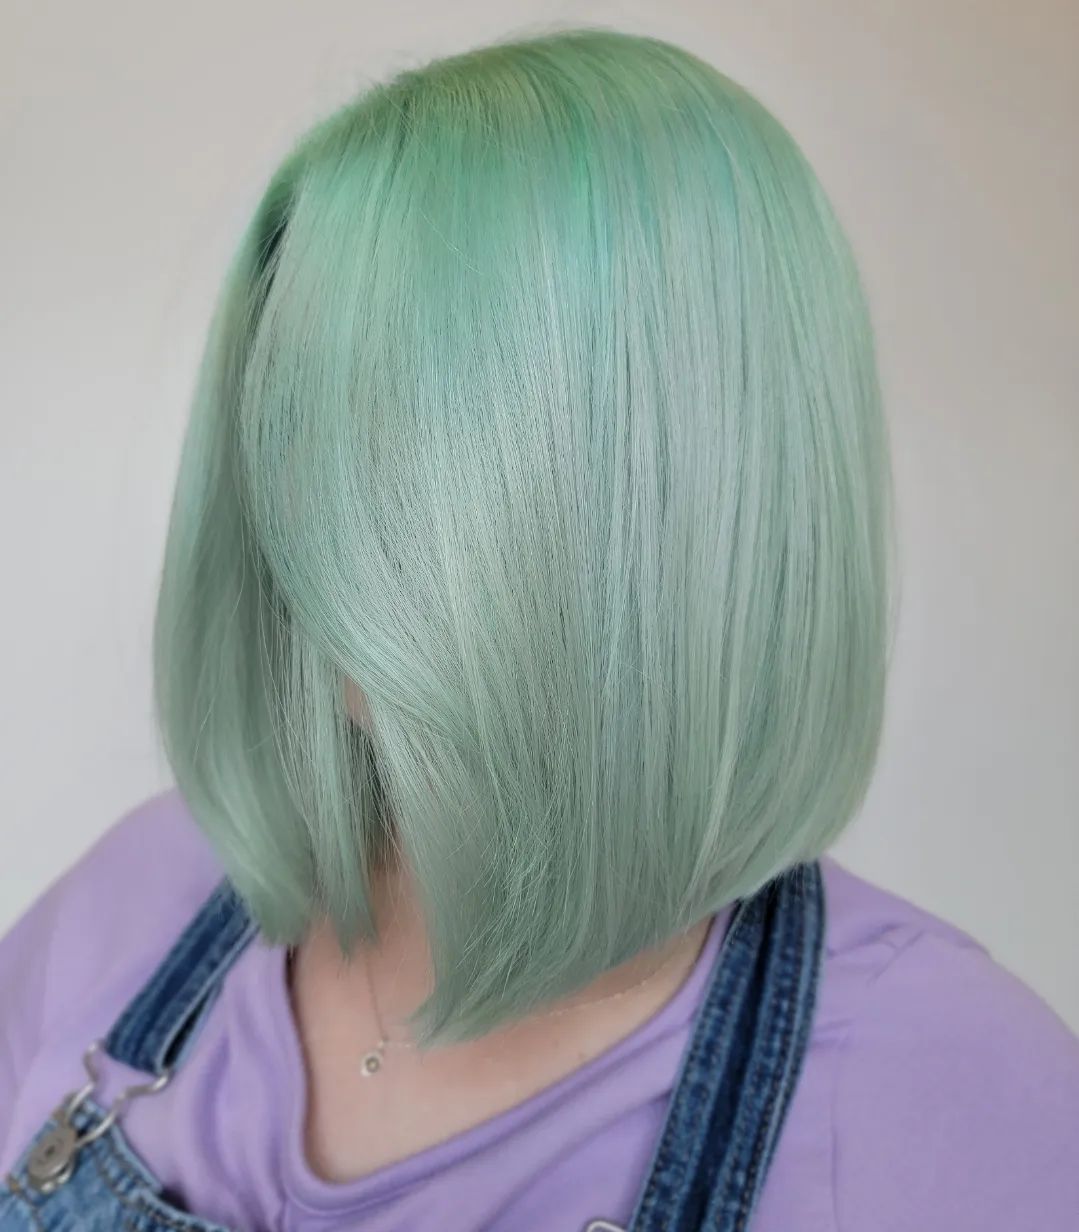 Mint Green Hair Color on Bob Cut